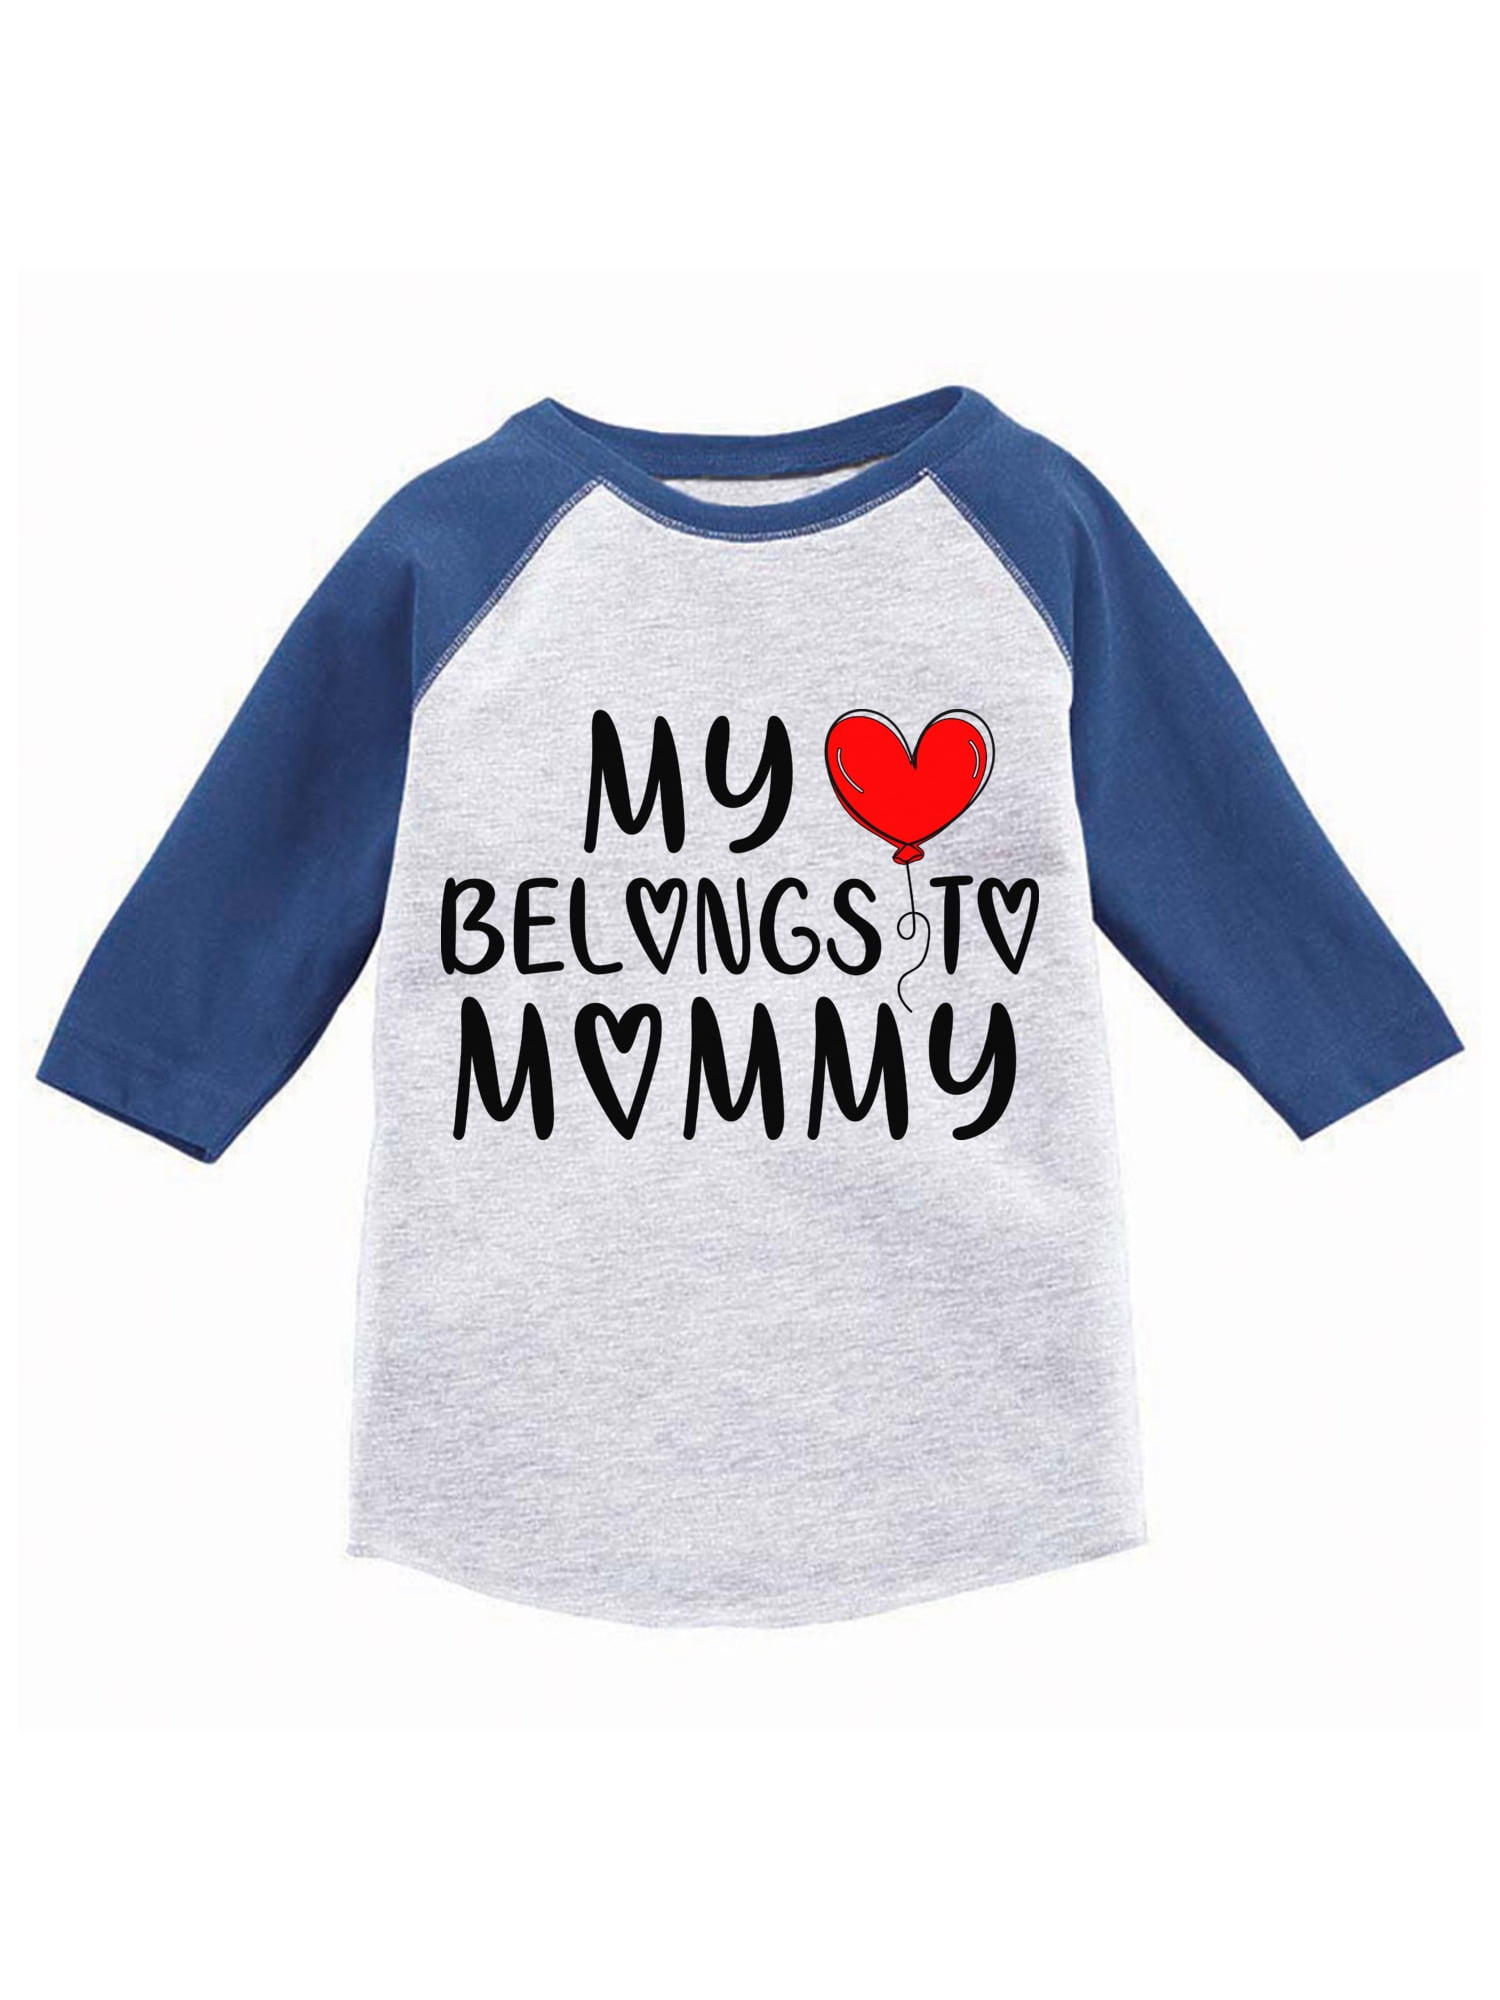 My Heart Belongs to Mommy Raglan T-Shirt 5t Boys Clothes 4t 3t 2t Girls ...